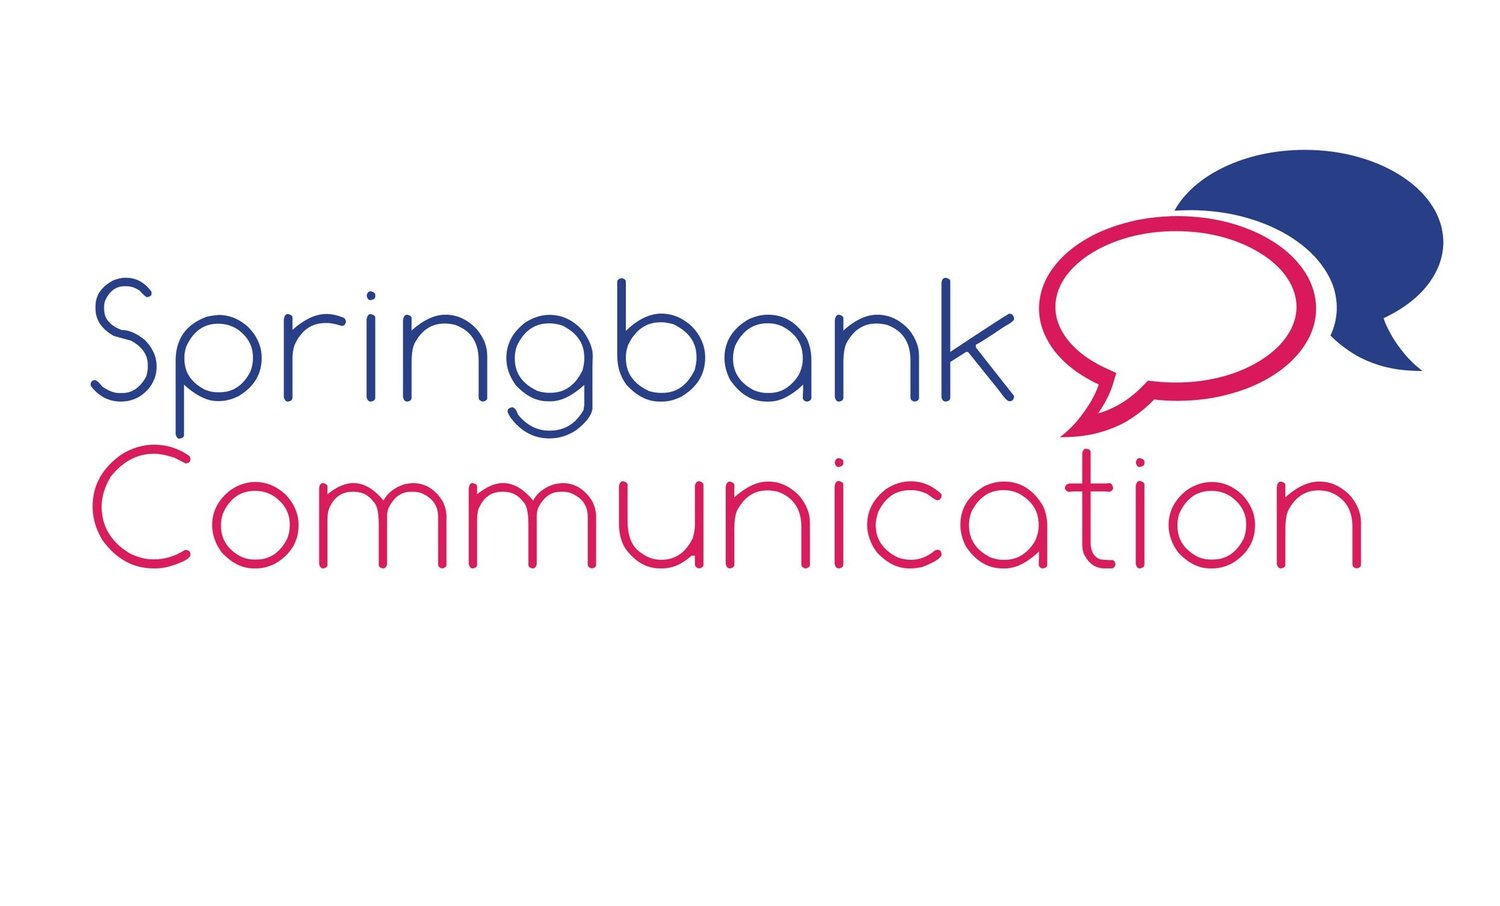 Springbank Communication